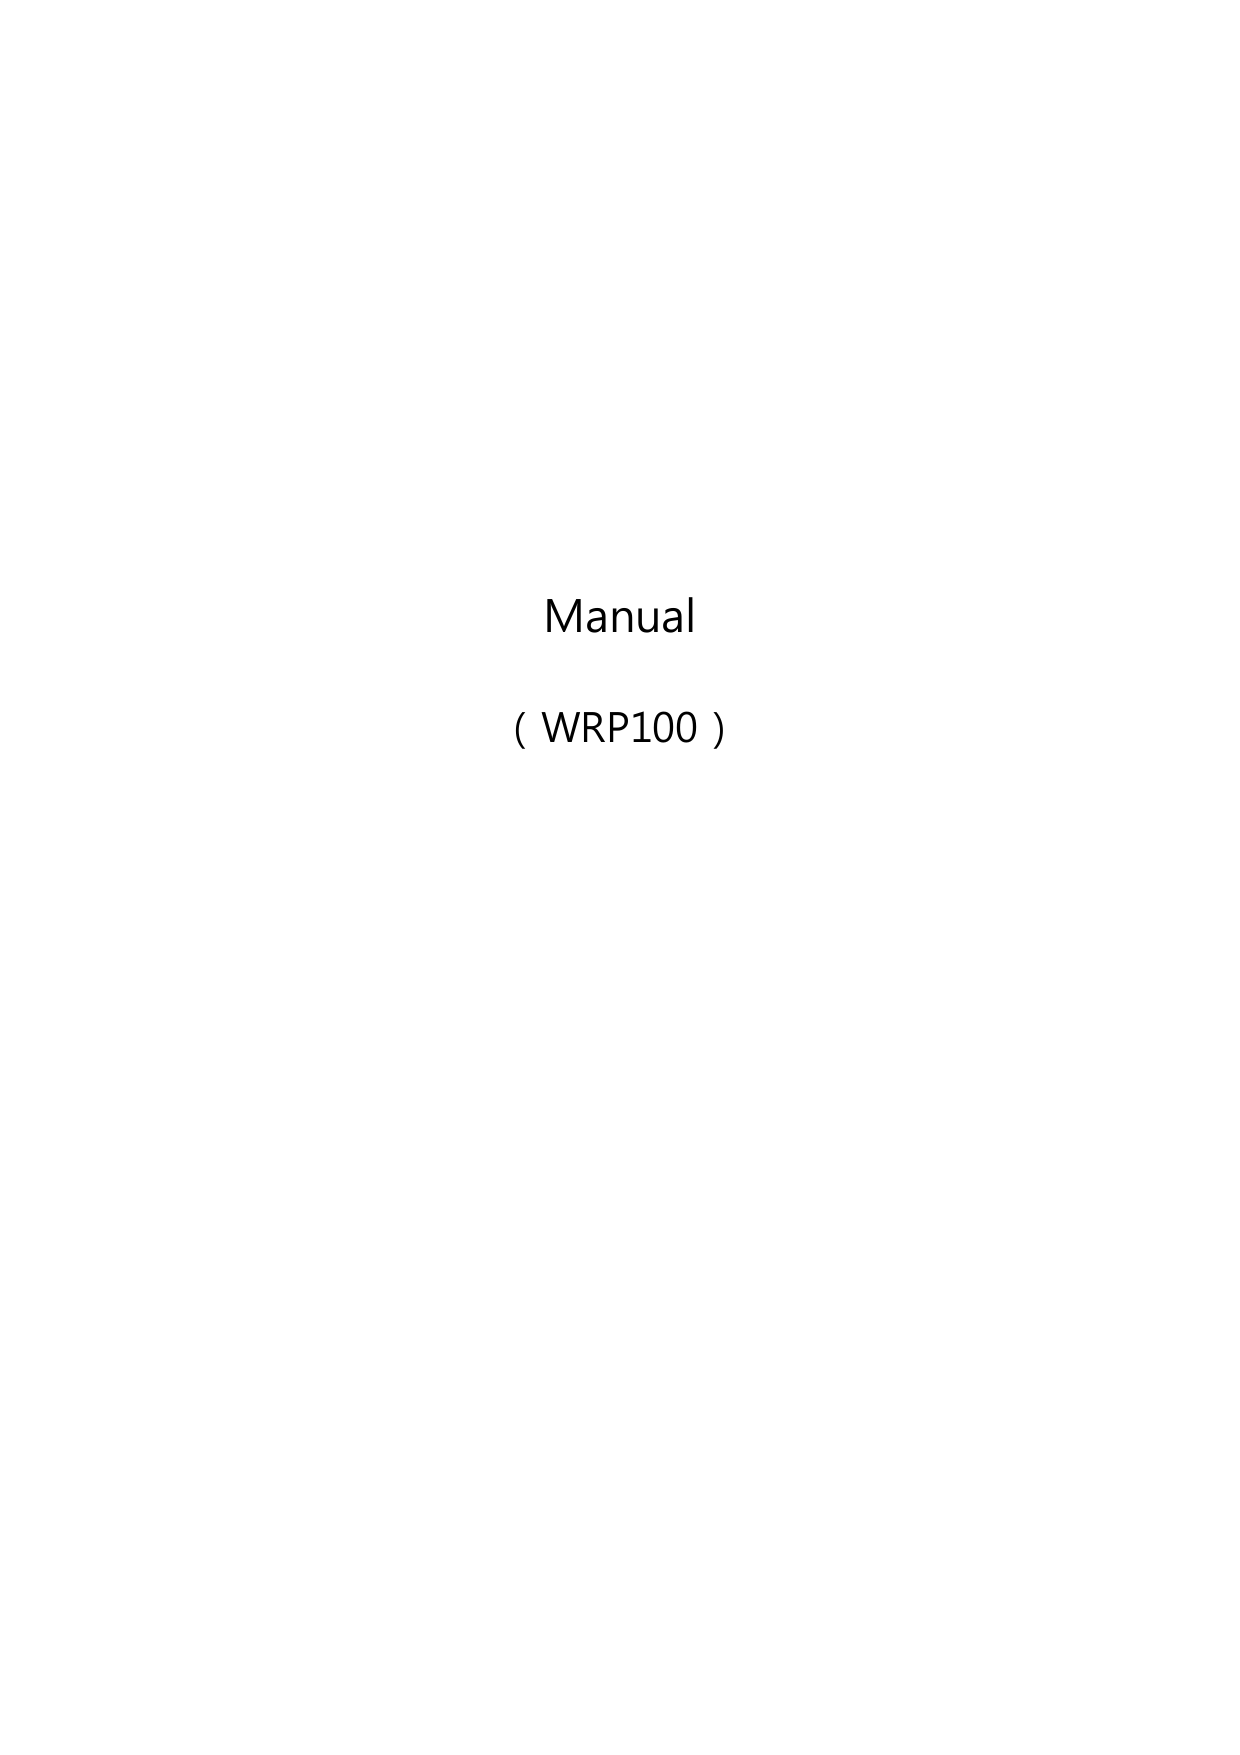 Manual( WRP100 )